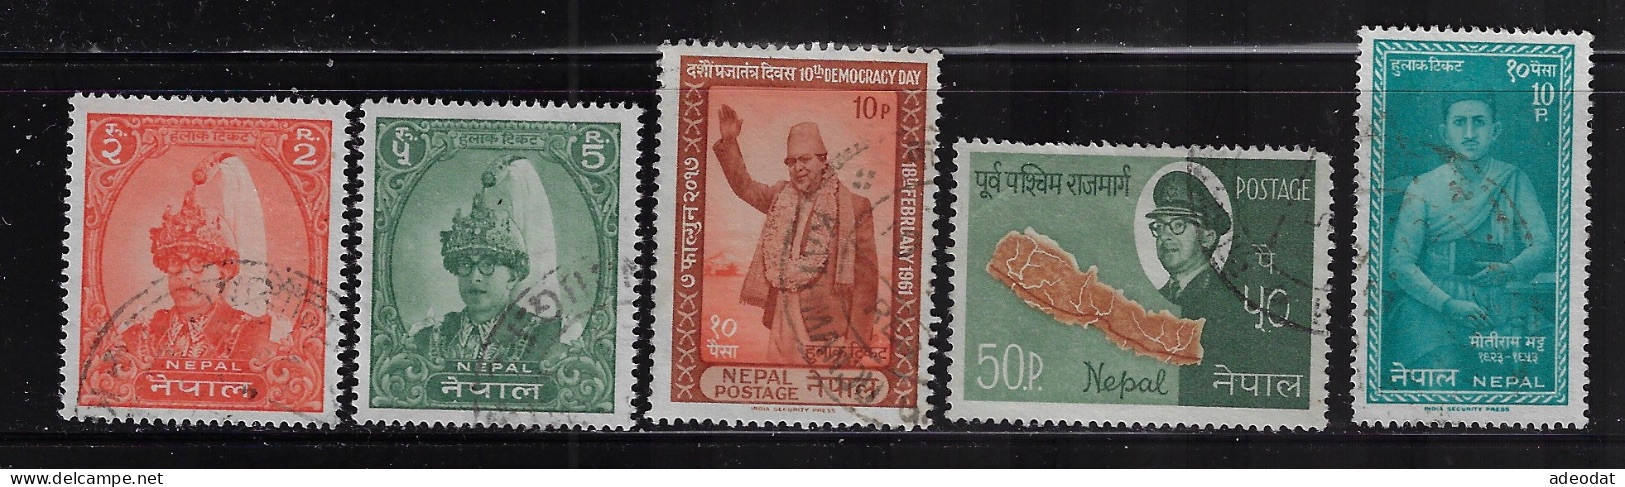 NEPAL  1961-64  SCOTT#129,142,150,151,172  USED - Nepal